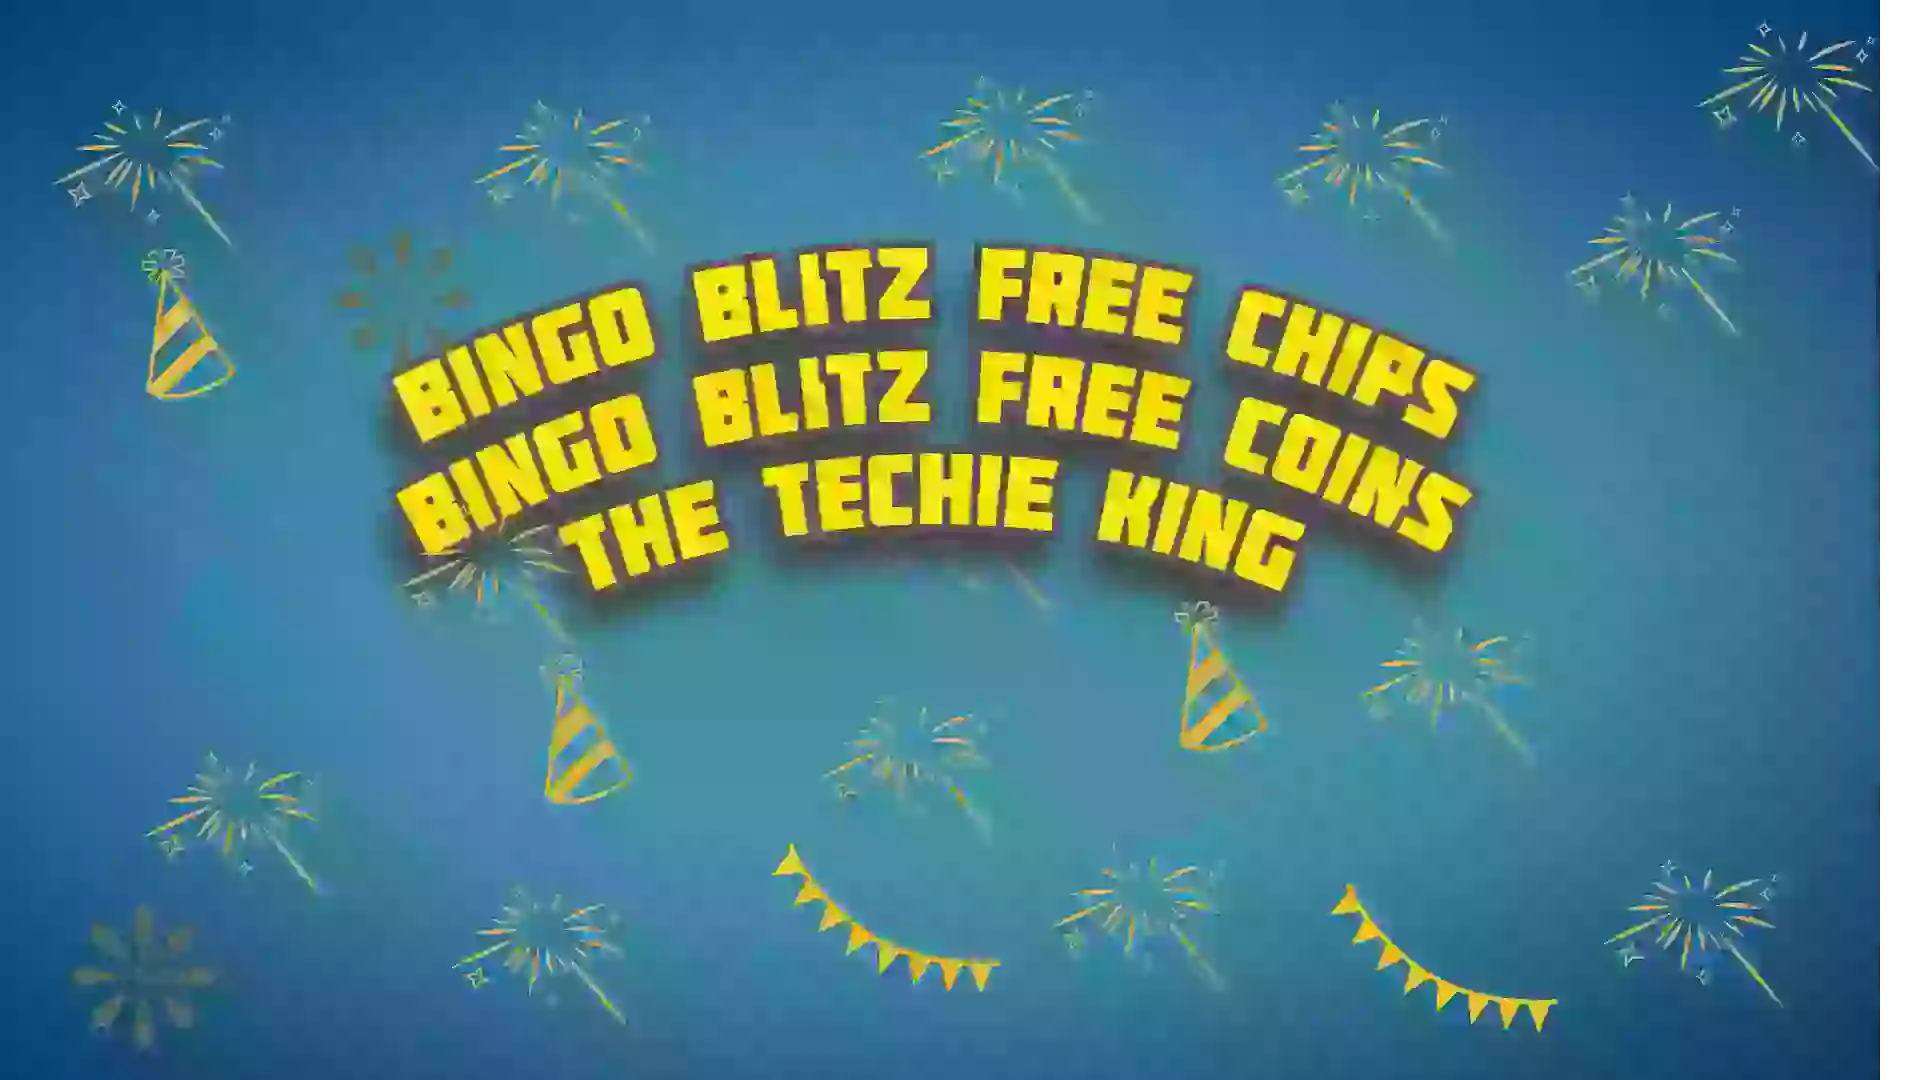 Bingo blitz free chips | bingo blitz free coins 2022